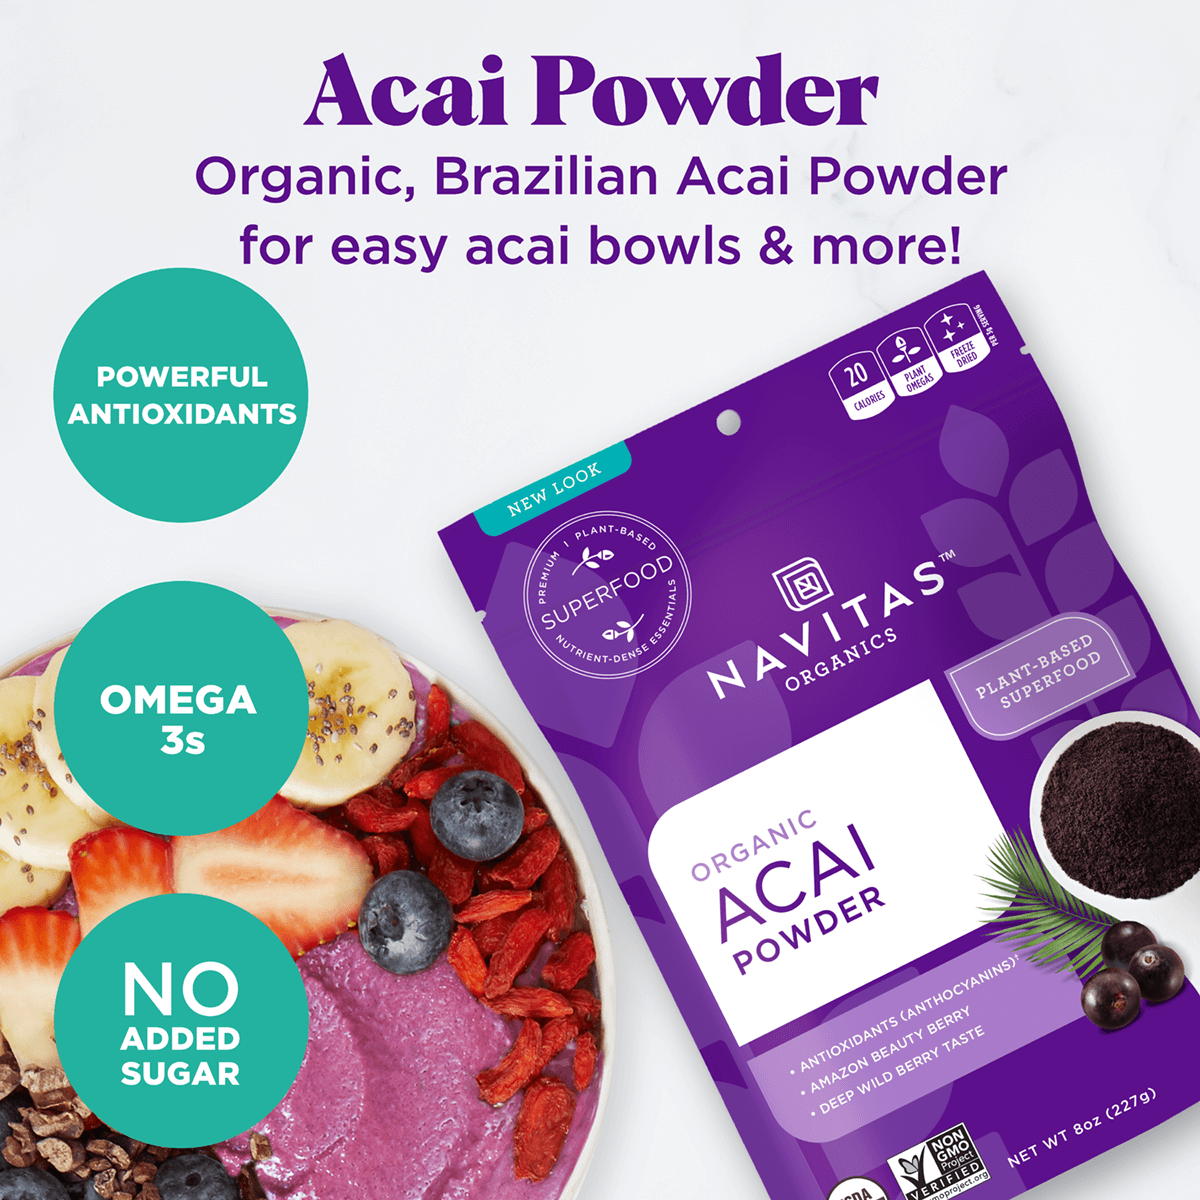 Navitas Acai Powder with powerful antioxidants, omega 3s and no sugar added.